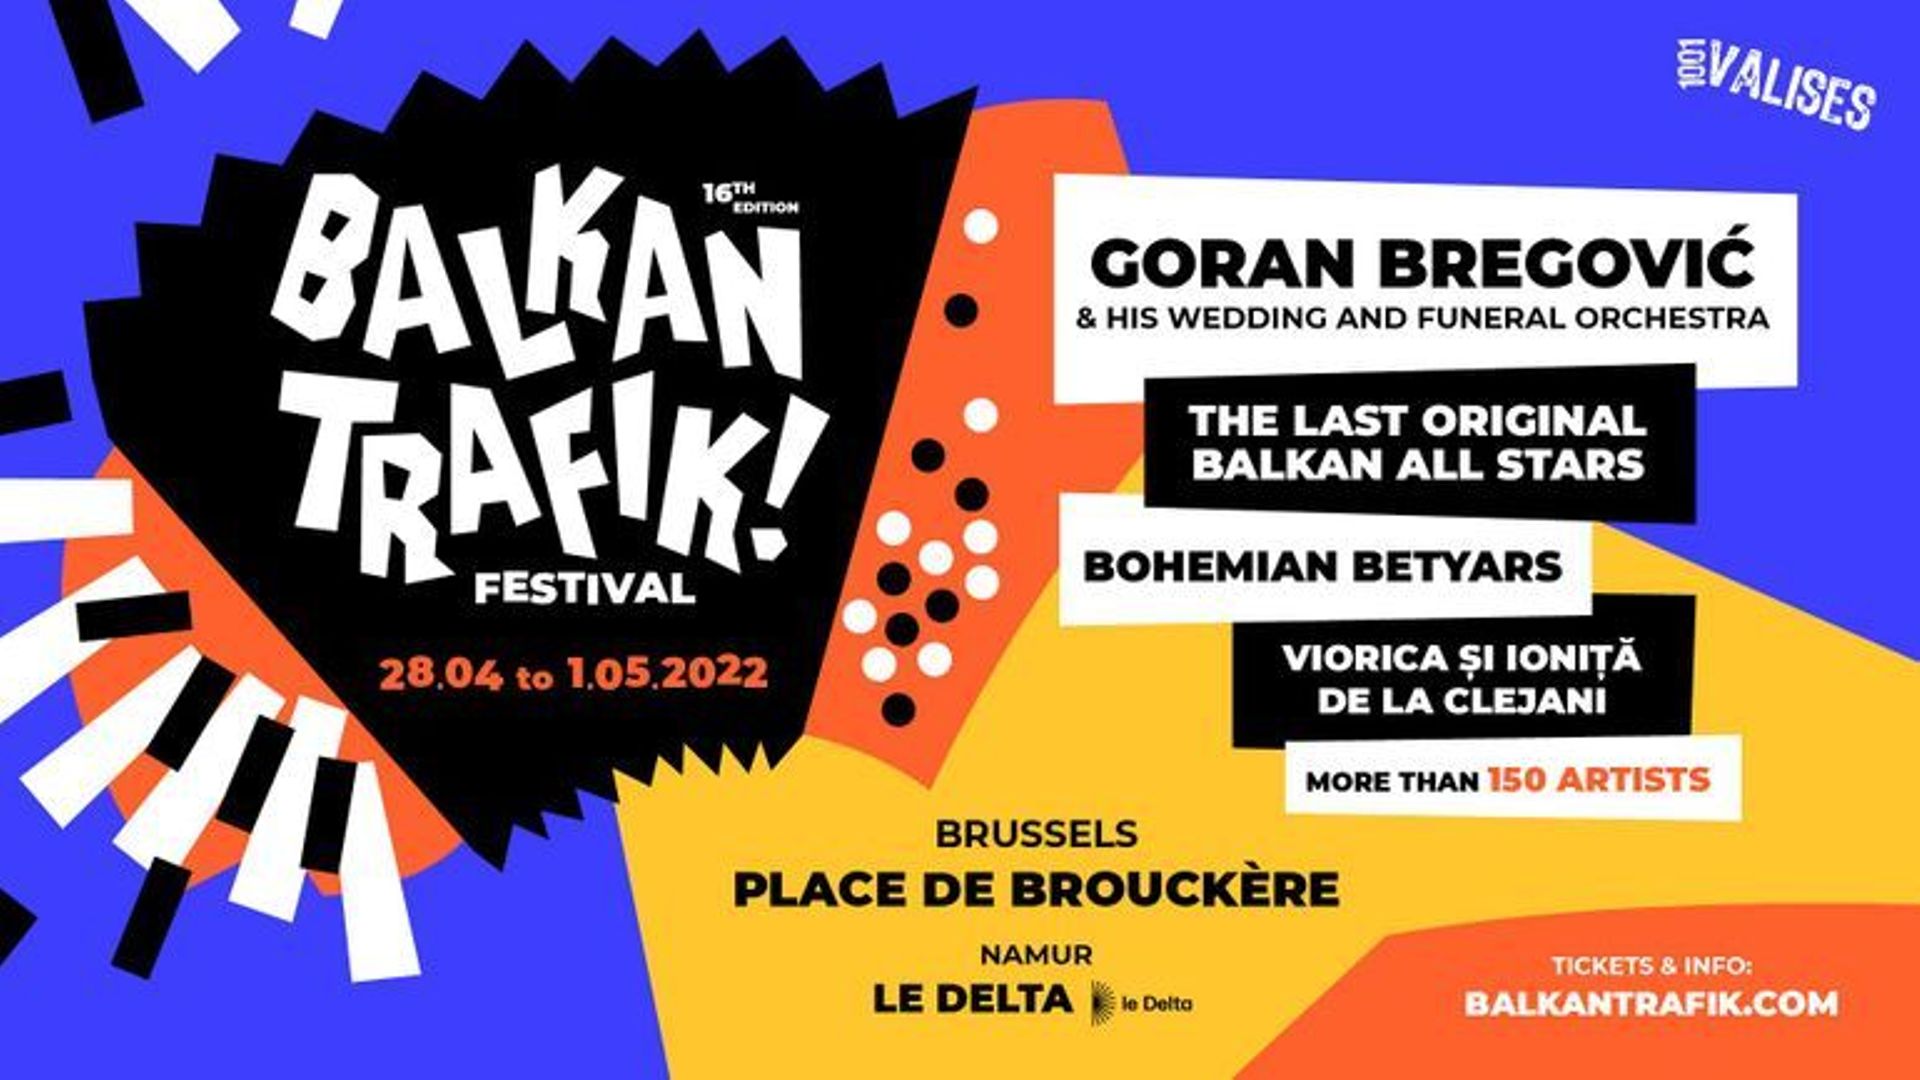 Balkan Trafik Festival 2022 à Bruxelles et Namur